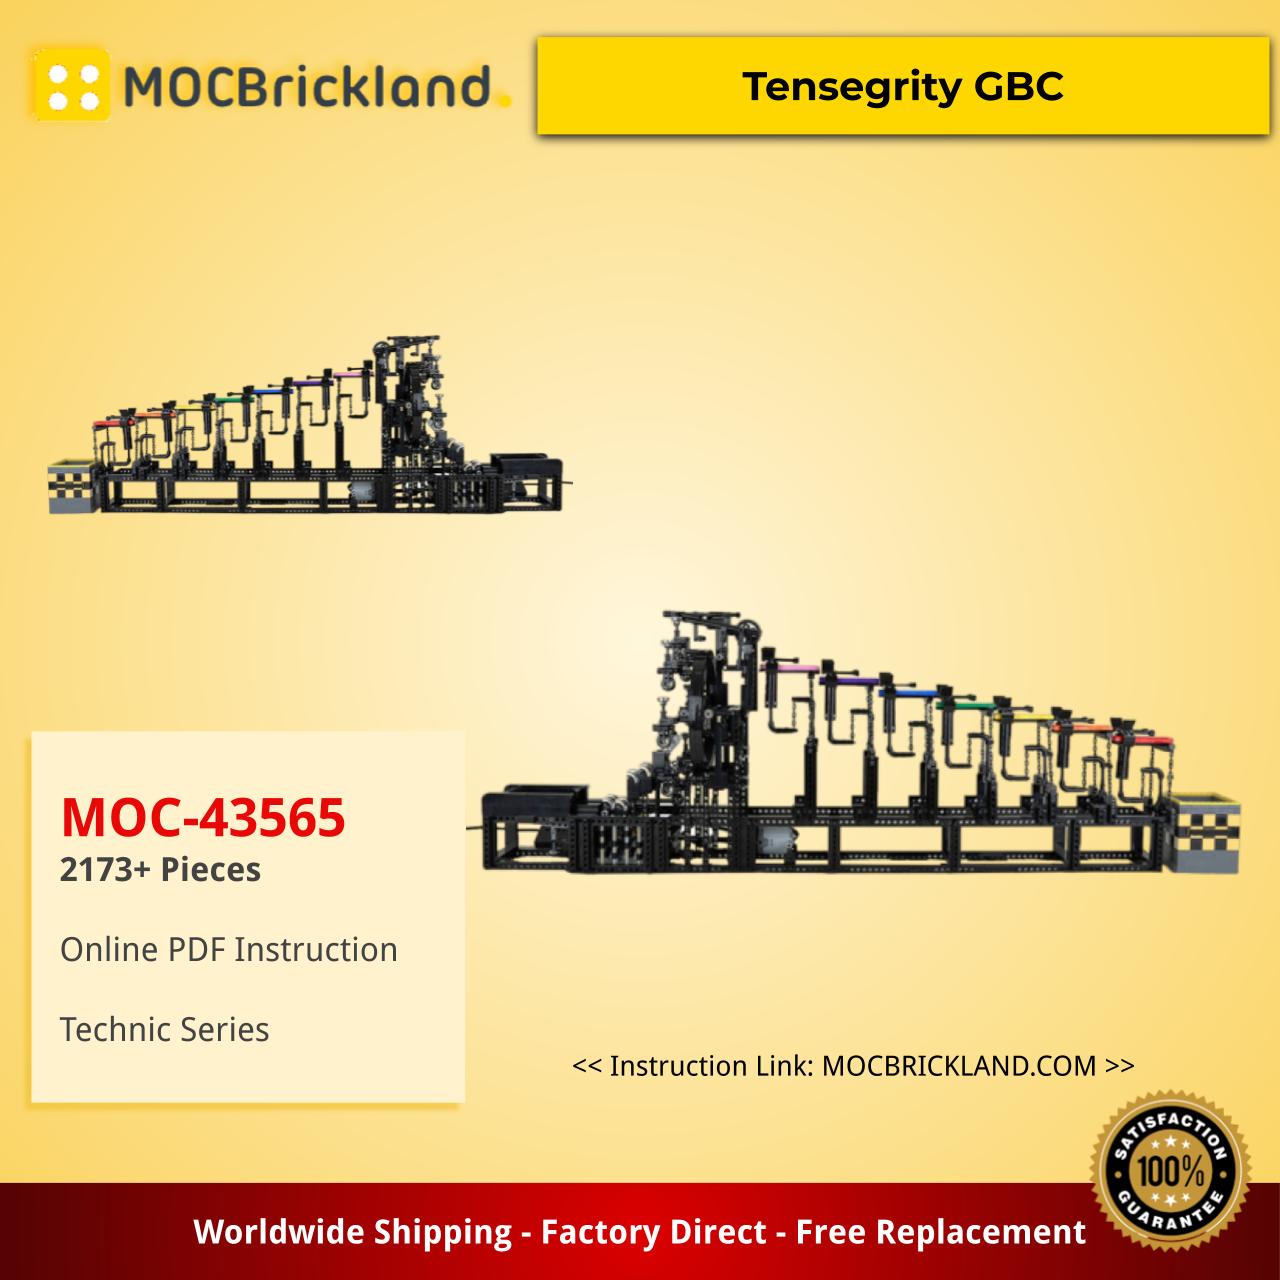 MOCBRICKLAND MOC-43565 Tensegrity GBC